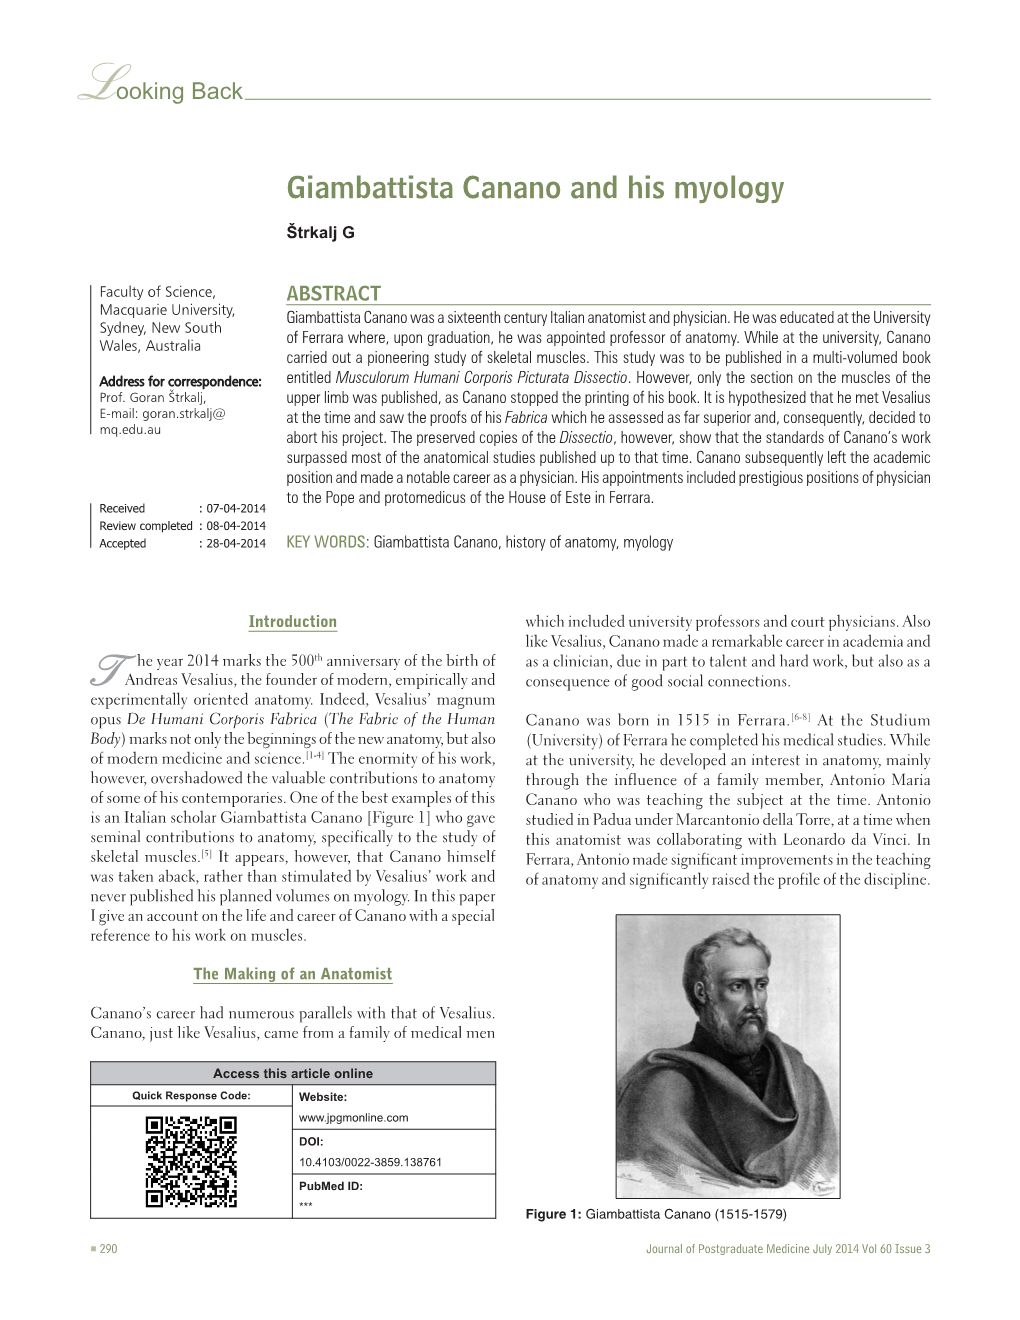 Giambattista Canano and His Myology